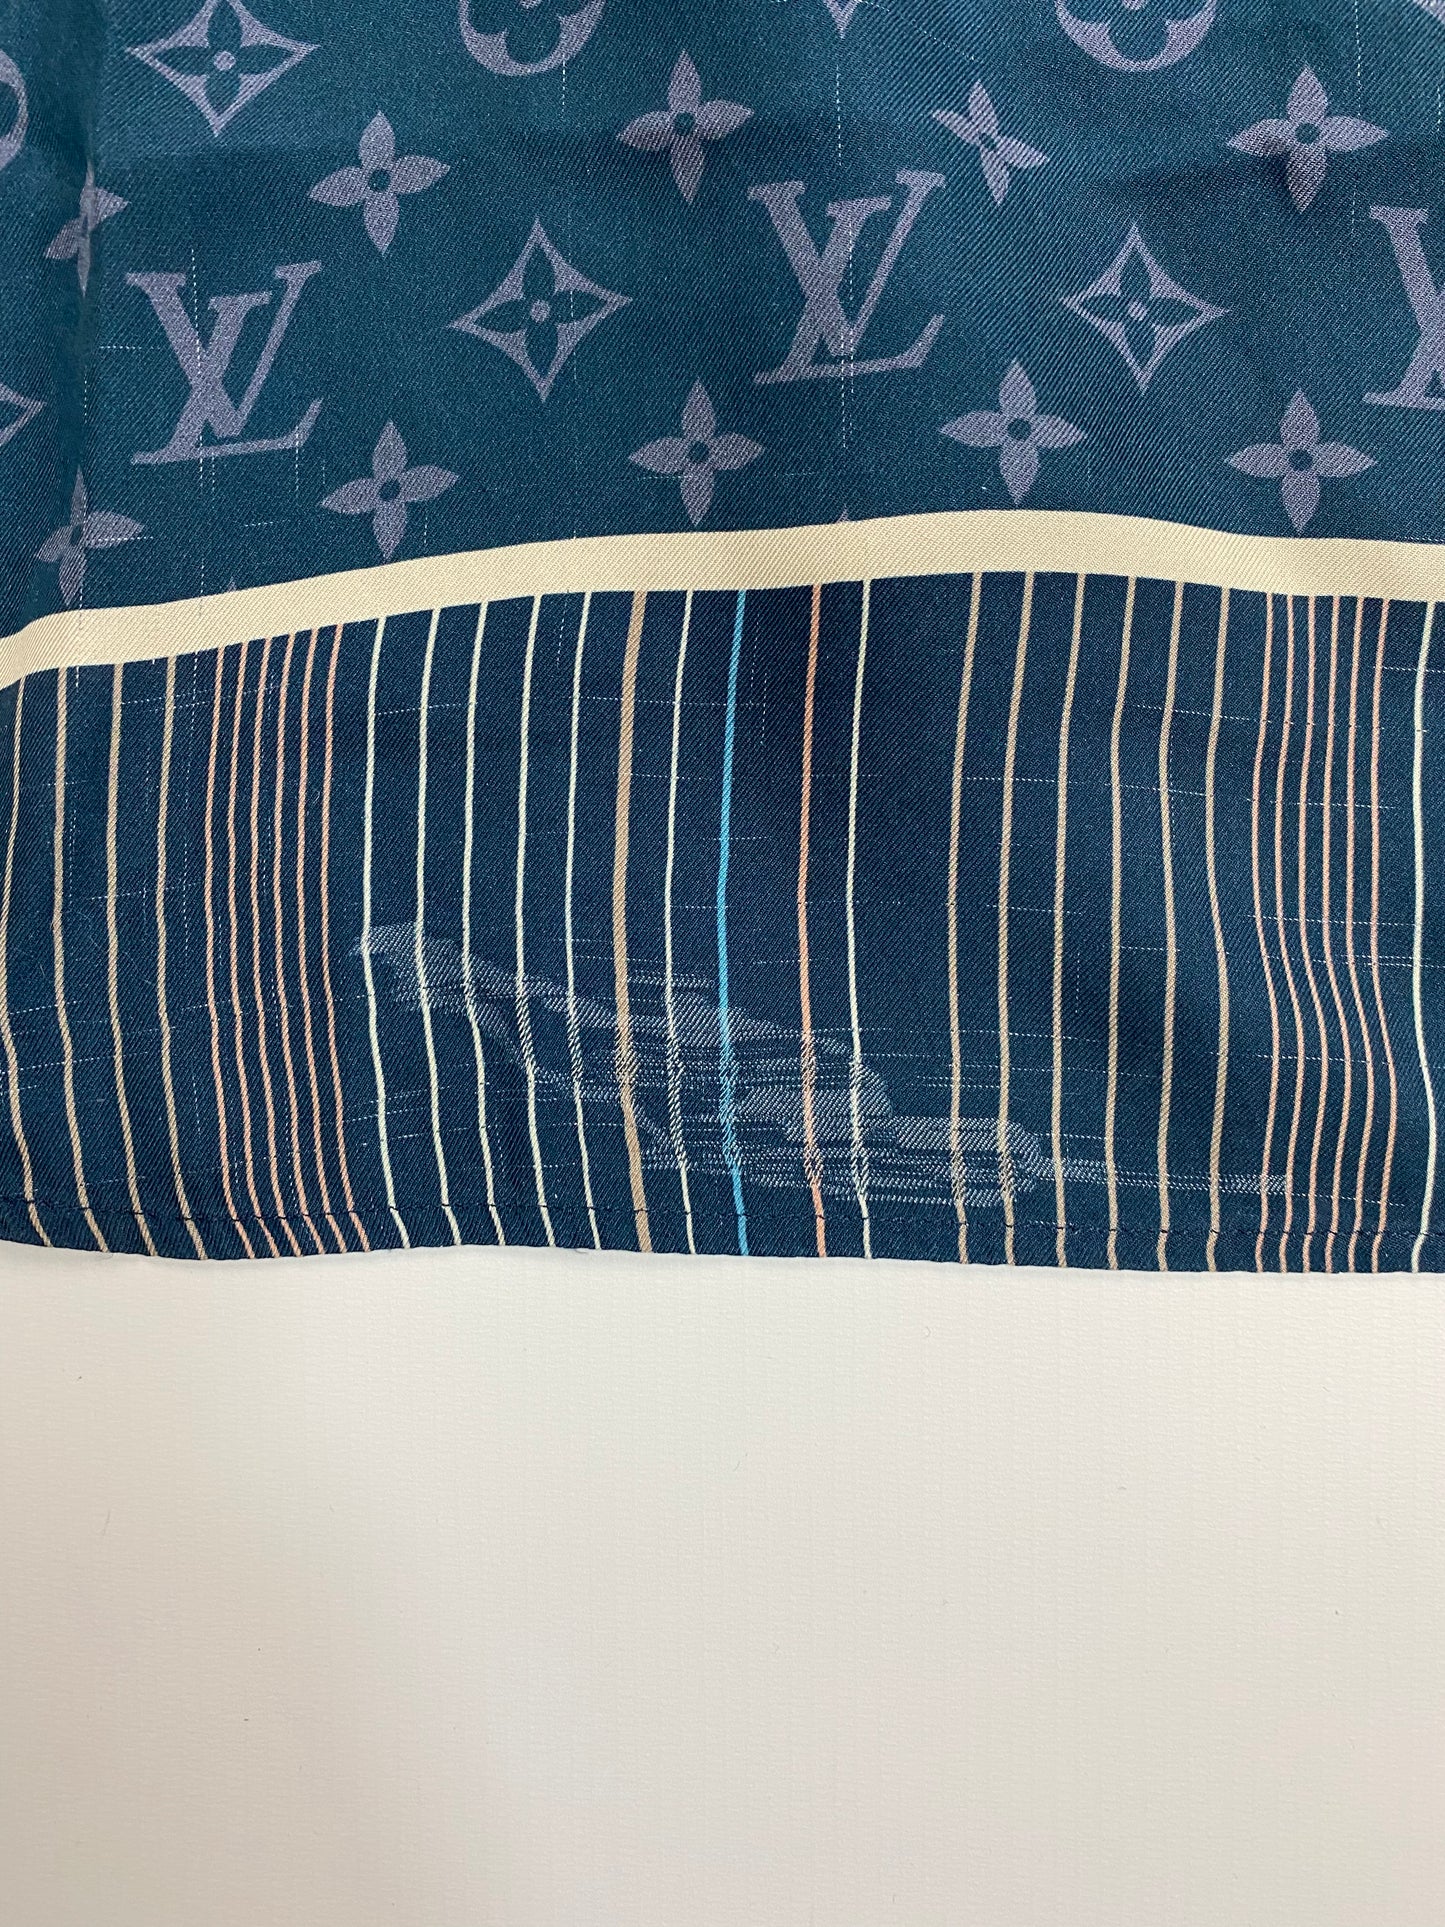 LV AW17 runway airplane silk monogram longsleeve pajama shirt SZ:M